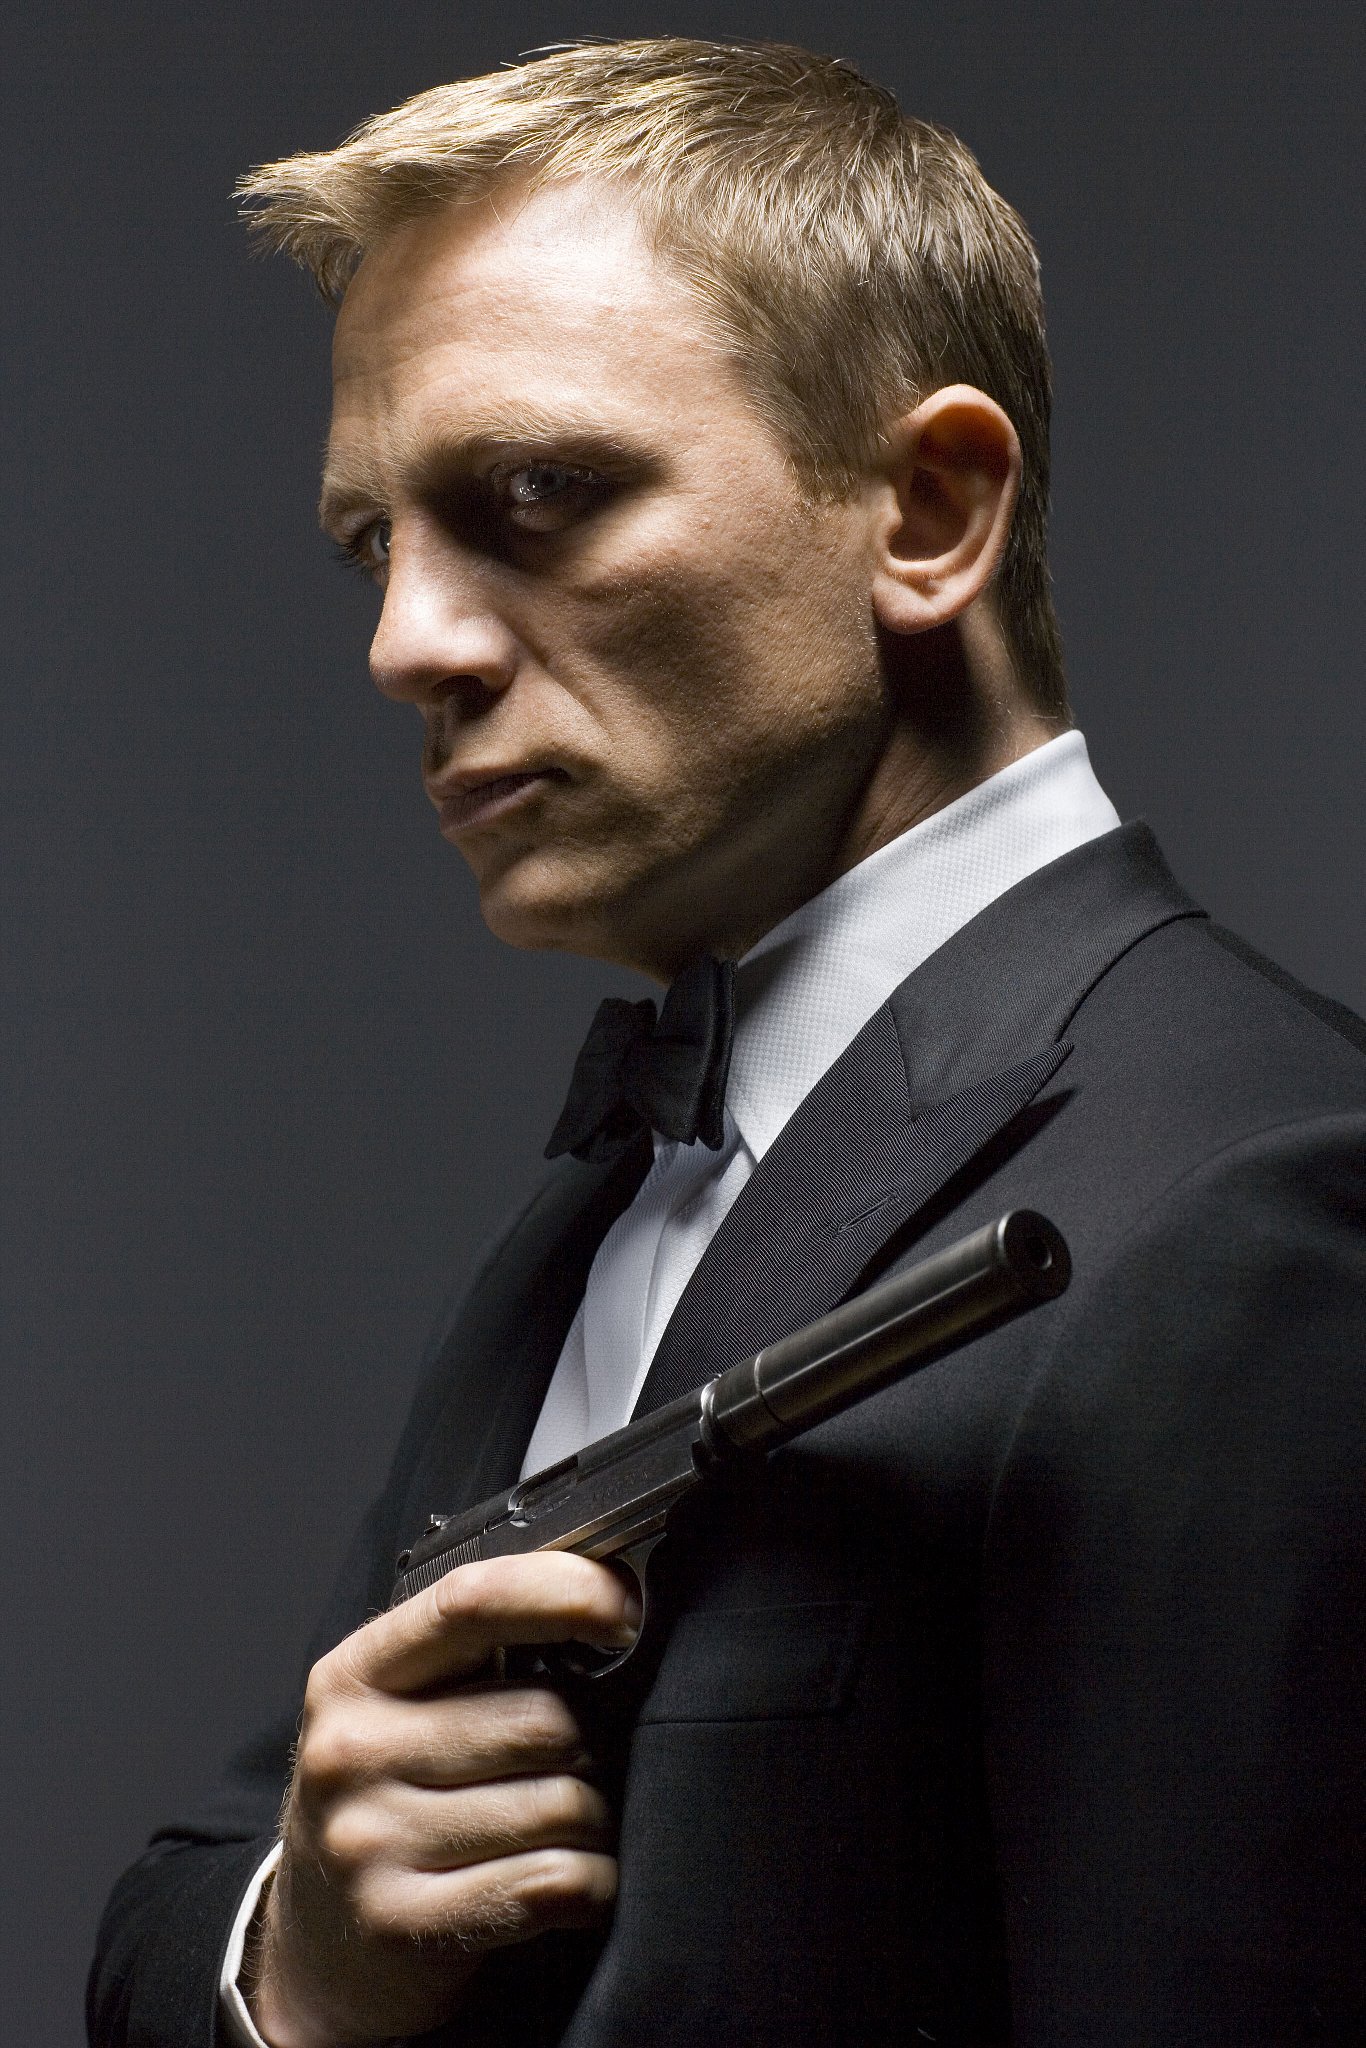 The Daniel Craig James Bond Trilogy A Review By Gms Two Average Guys